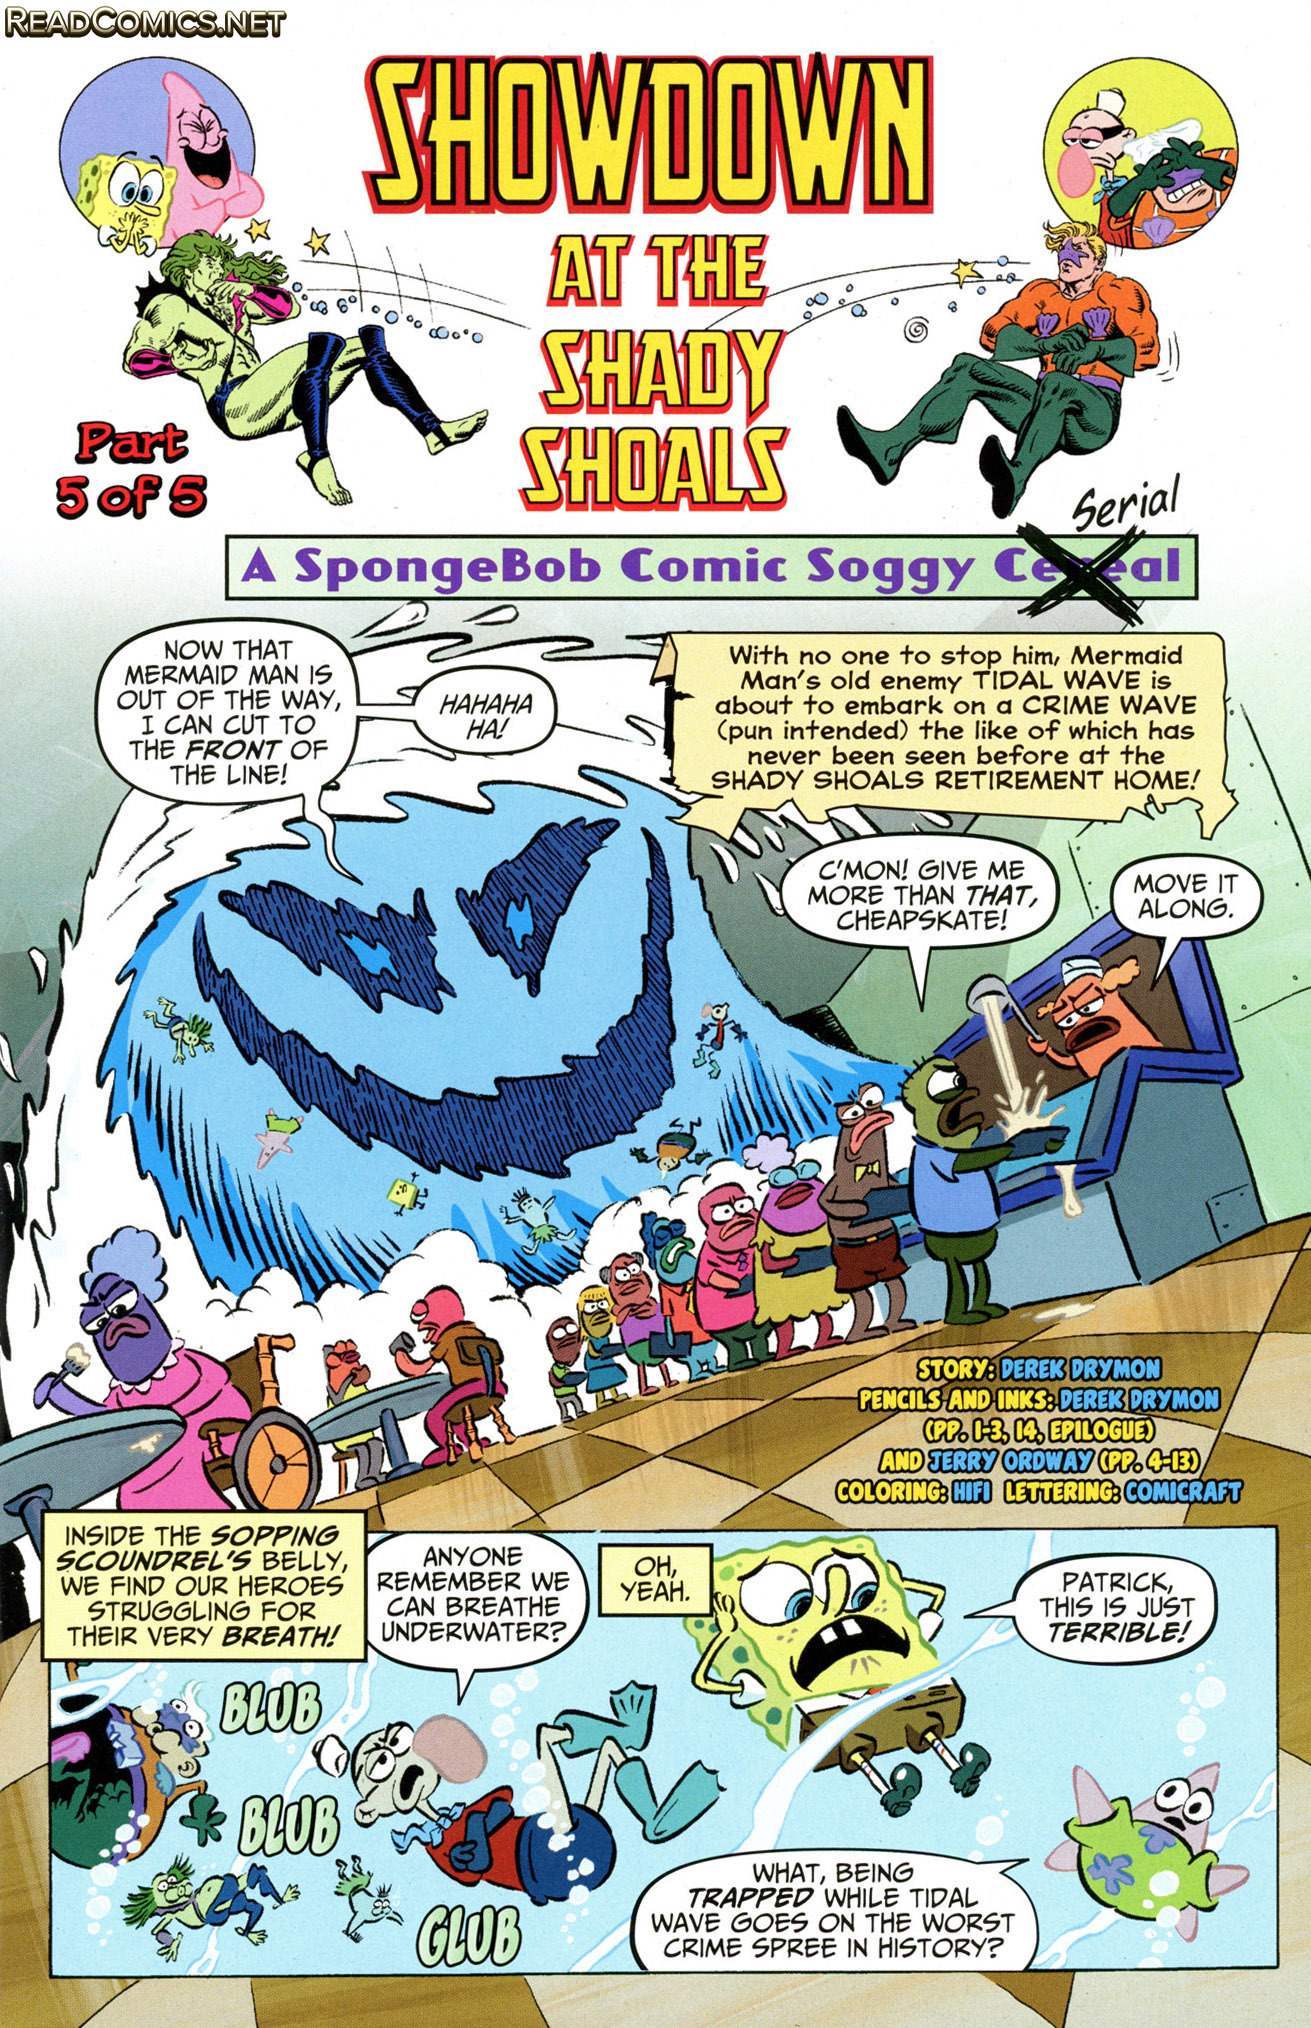 SpongeBob Comics (2011-): Chapter 36 - Page 3